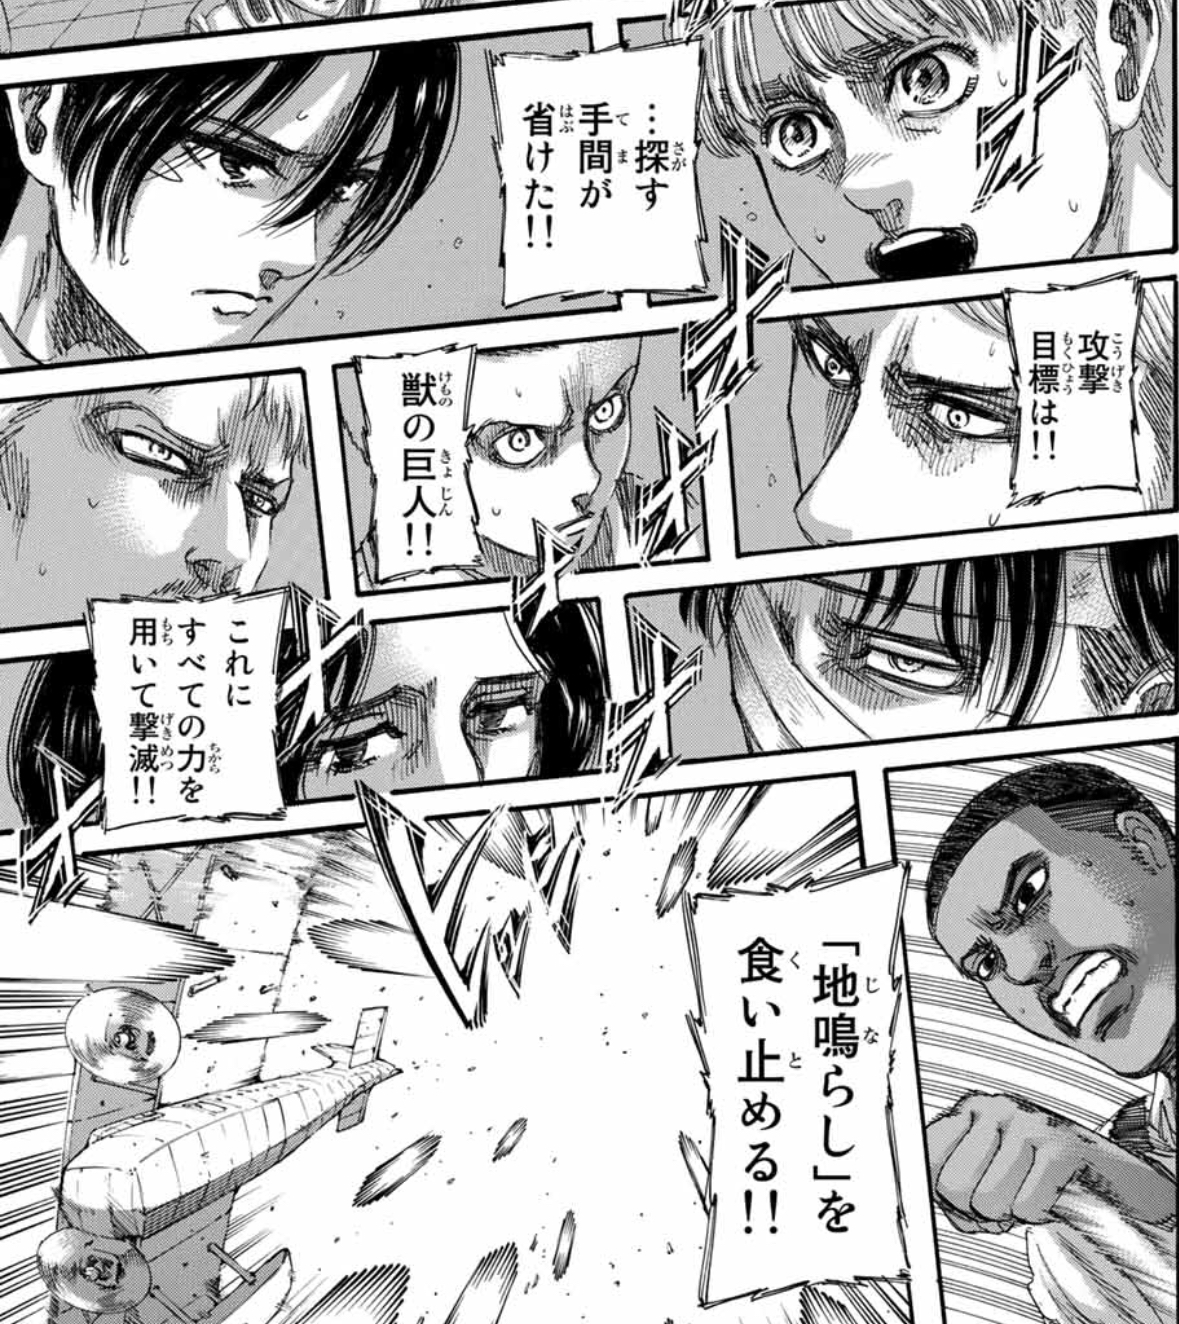 Attack on Titan Manga Meta - Chapter 131 Review - Hana's Blog